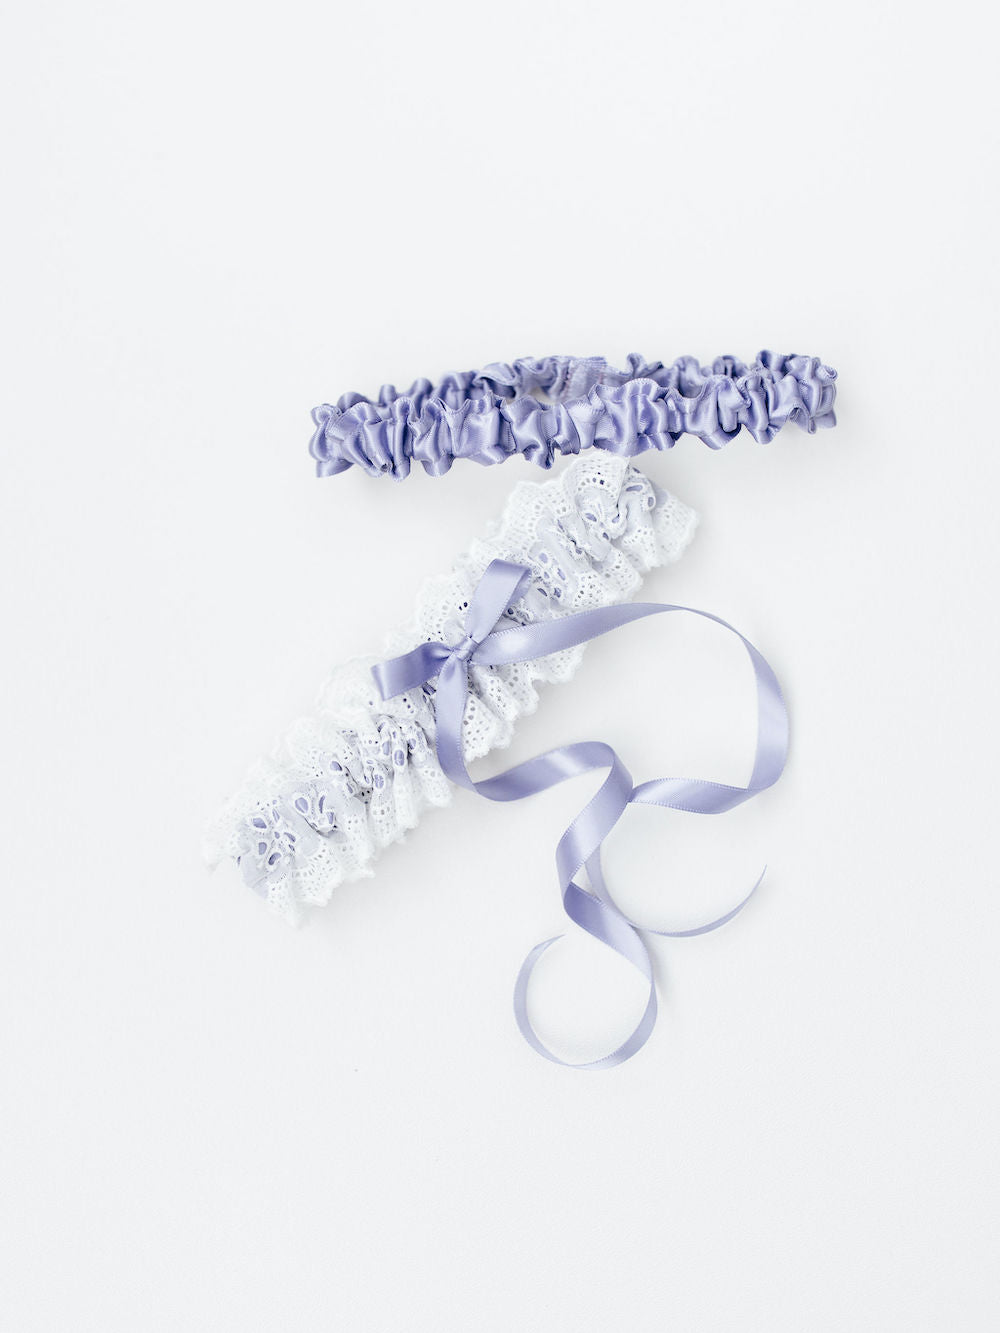 Lavender Satin and White Lace Garter Set by Expert Bridal Accessories Designer The Garter Girl 3